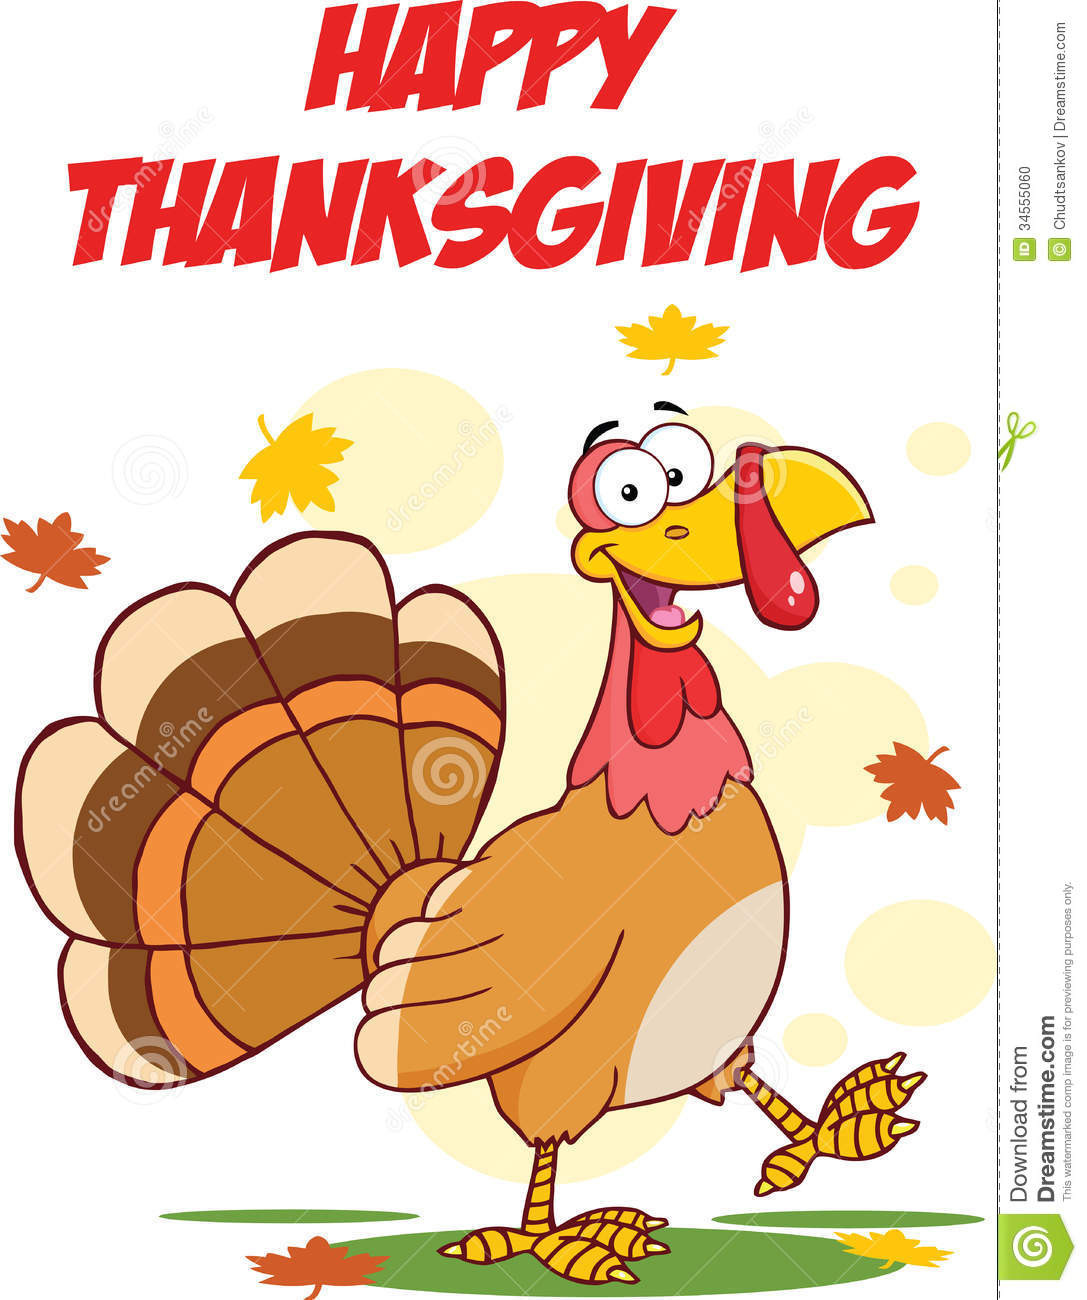 Thanksgiving Turkey Cartoon
 Happy Thanksgiving Greeting With Turkey Walking Stock